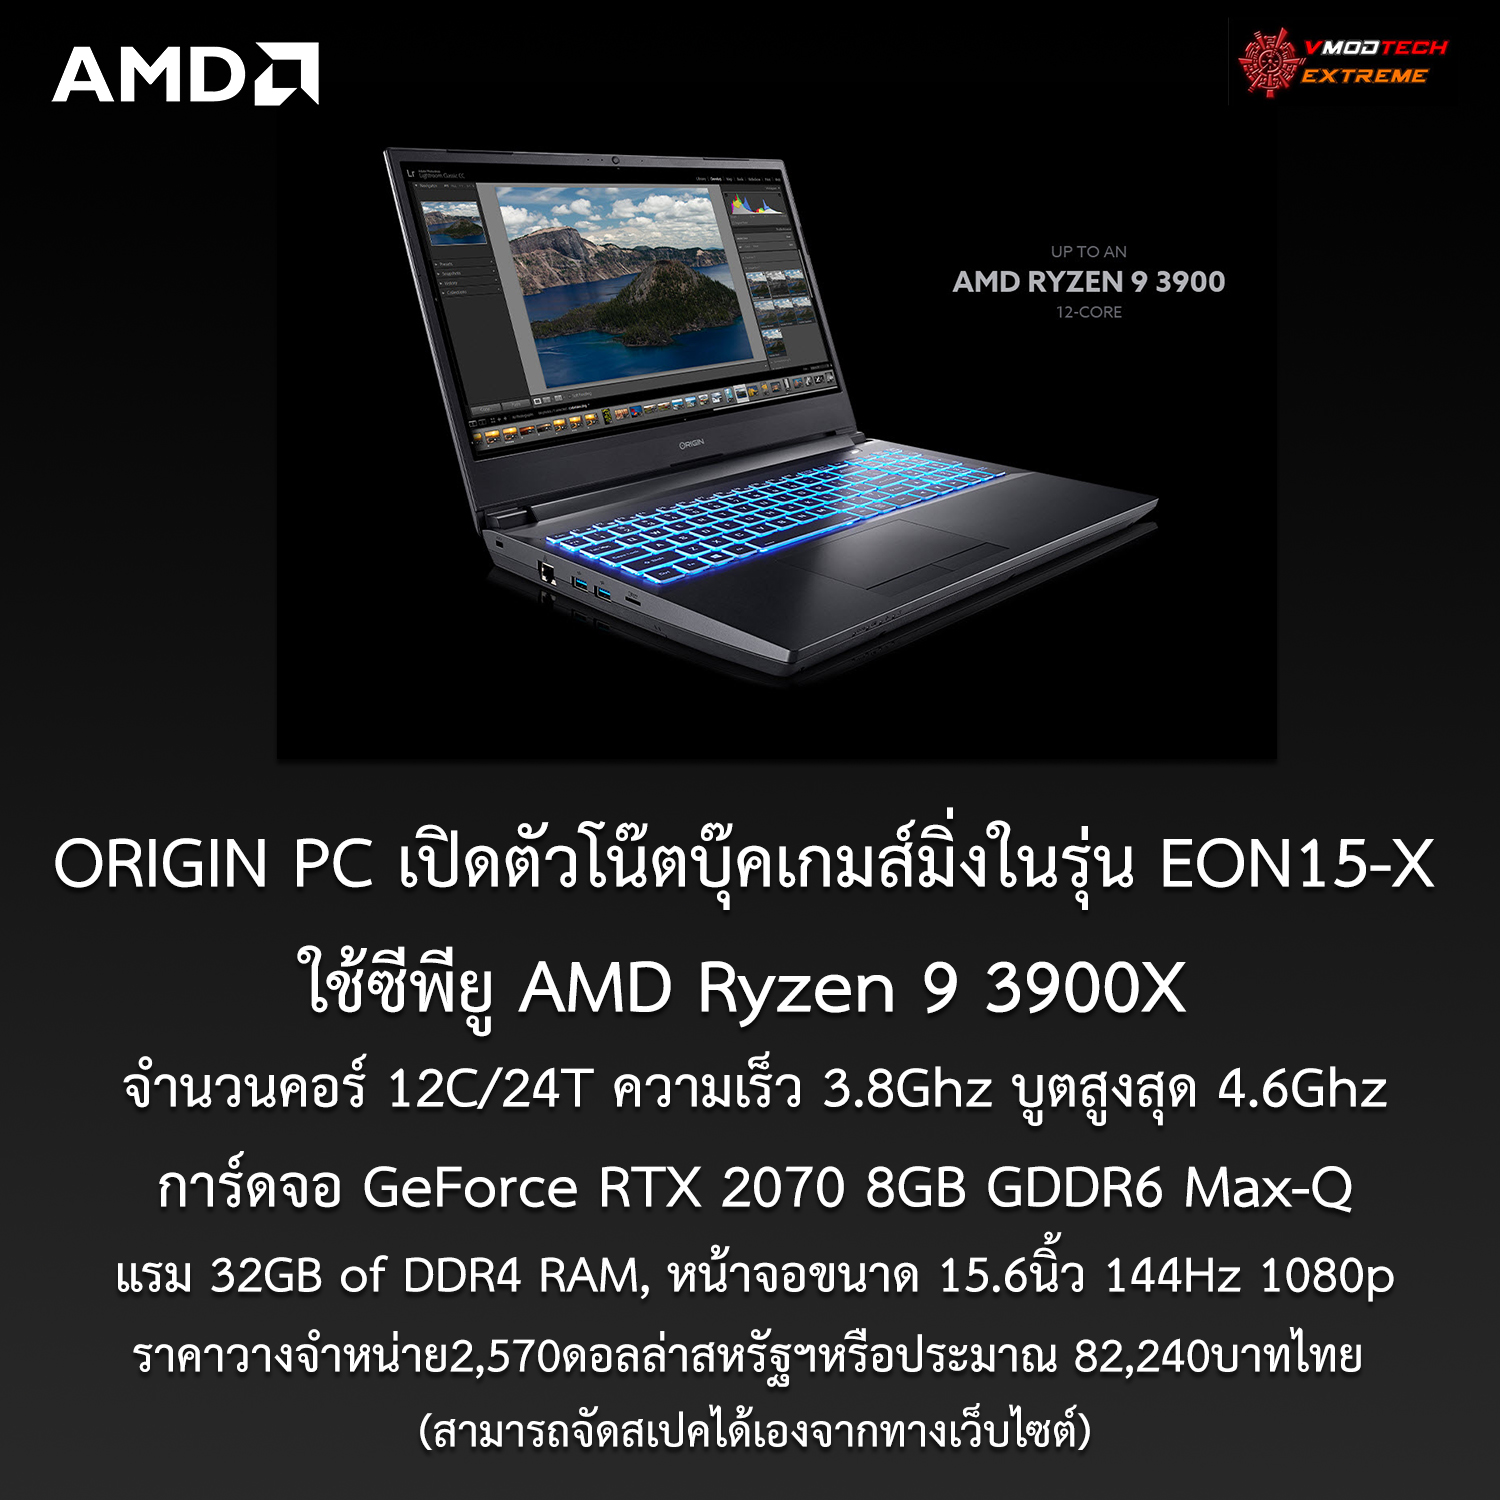 ORIGIN PC เปิดตัวโน๊ตบุ๊คเกมส์มิ่งในรุ่น EON15-X ที่ใช้ซีพียู AMD Ryzen 9 3900X 12C/24T และการ์ดจอ GeForce RTX 2070 รุ่นใหม่ล่าสุด